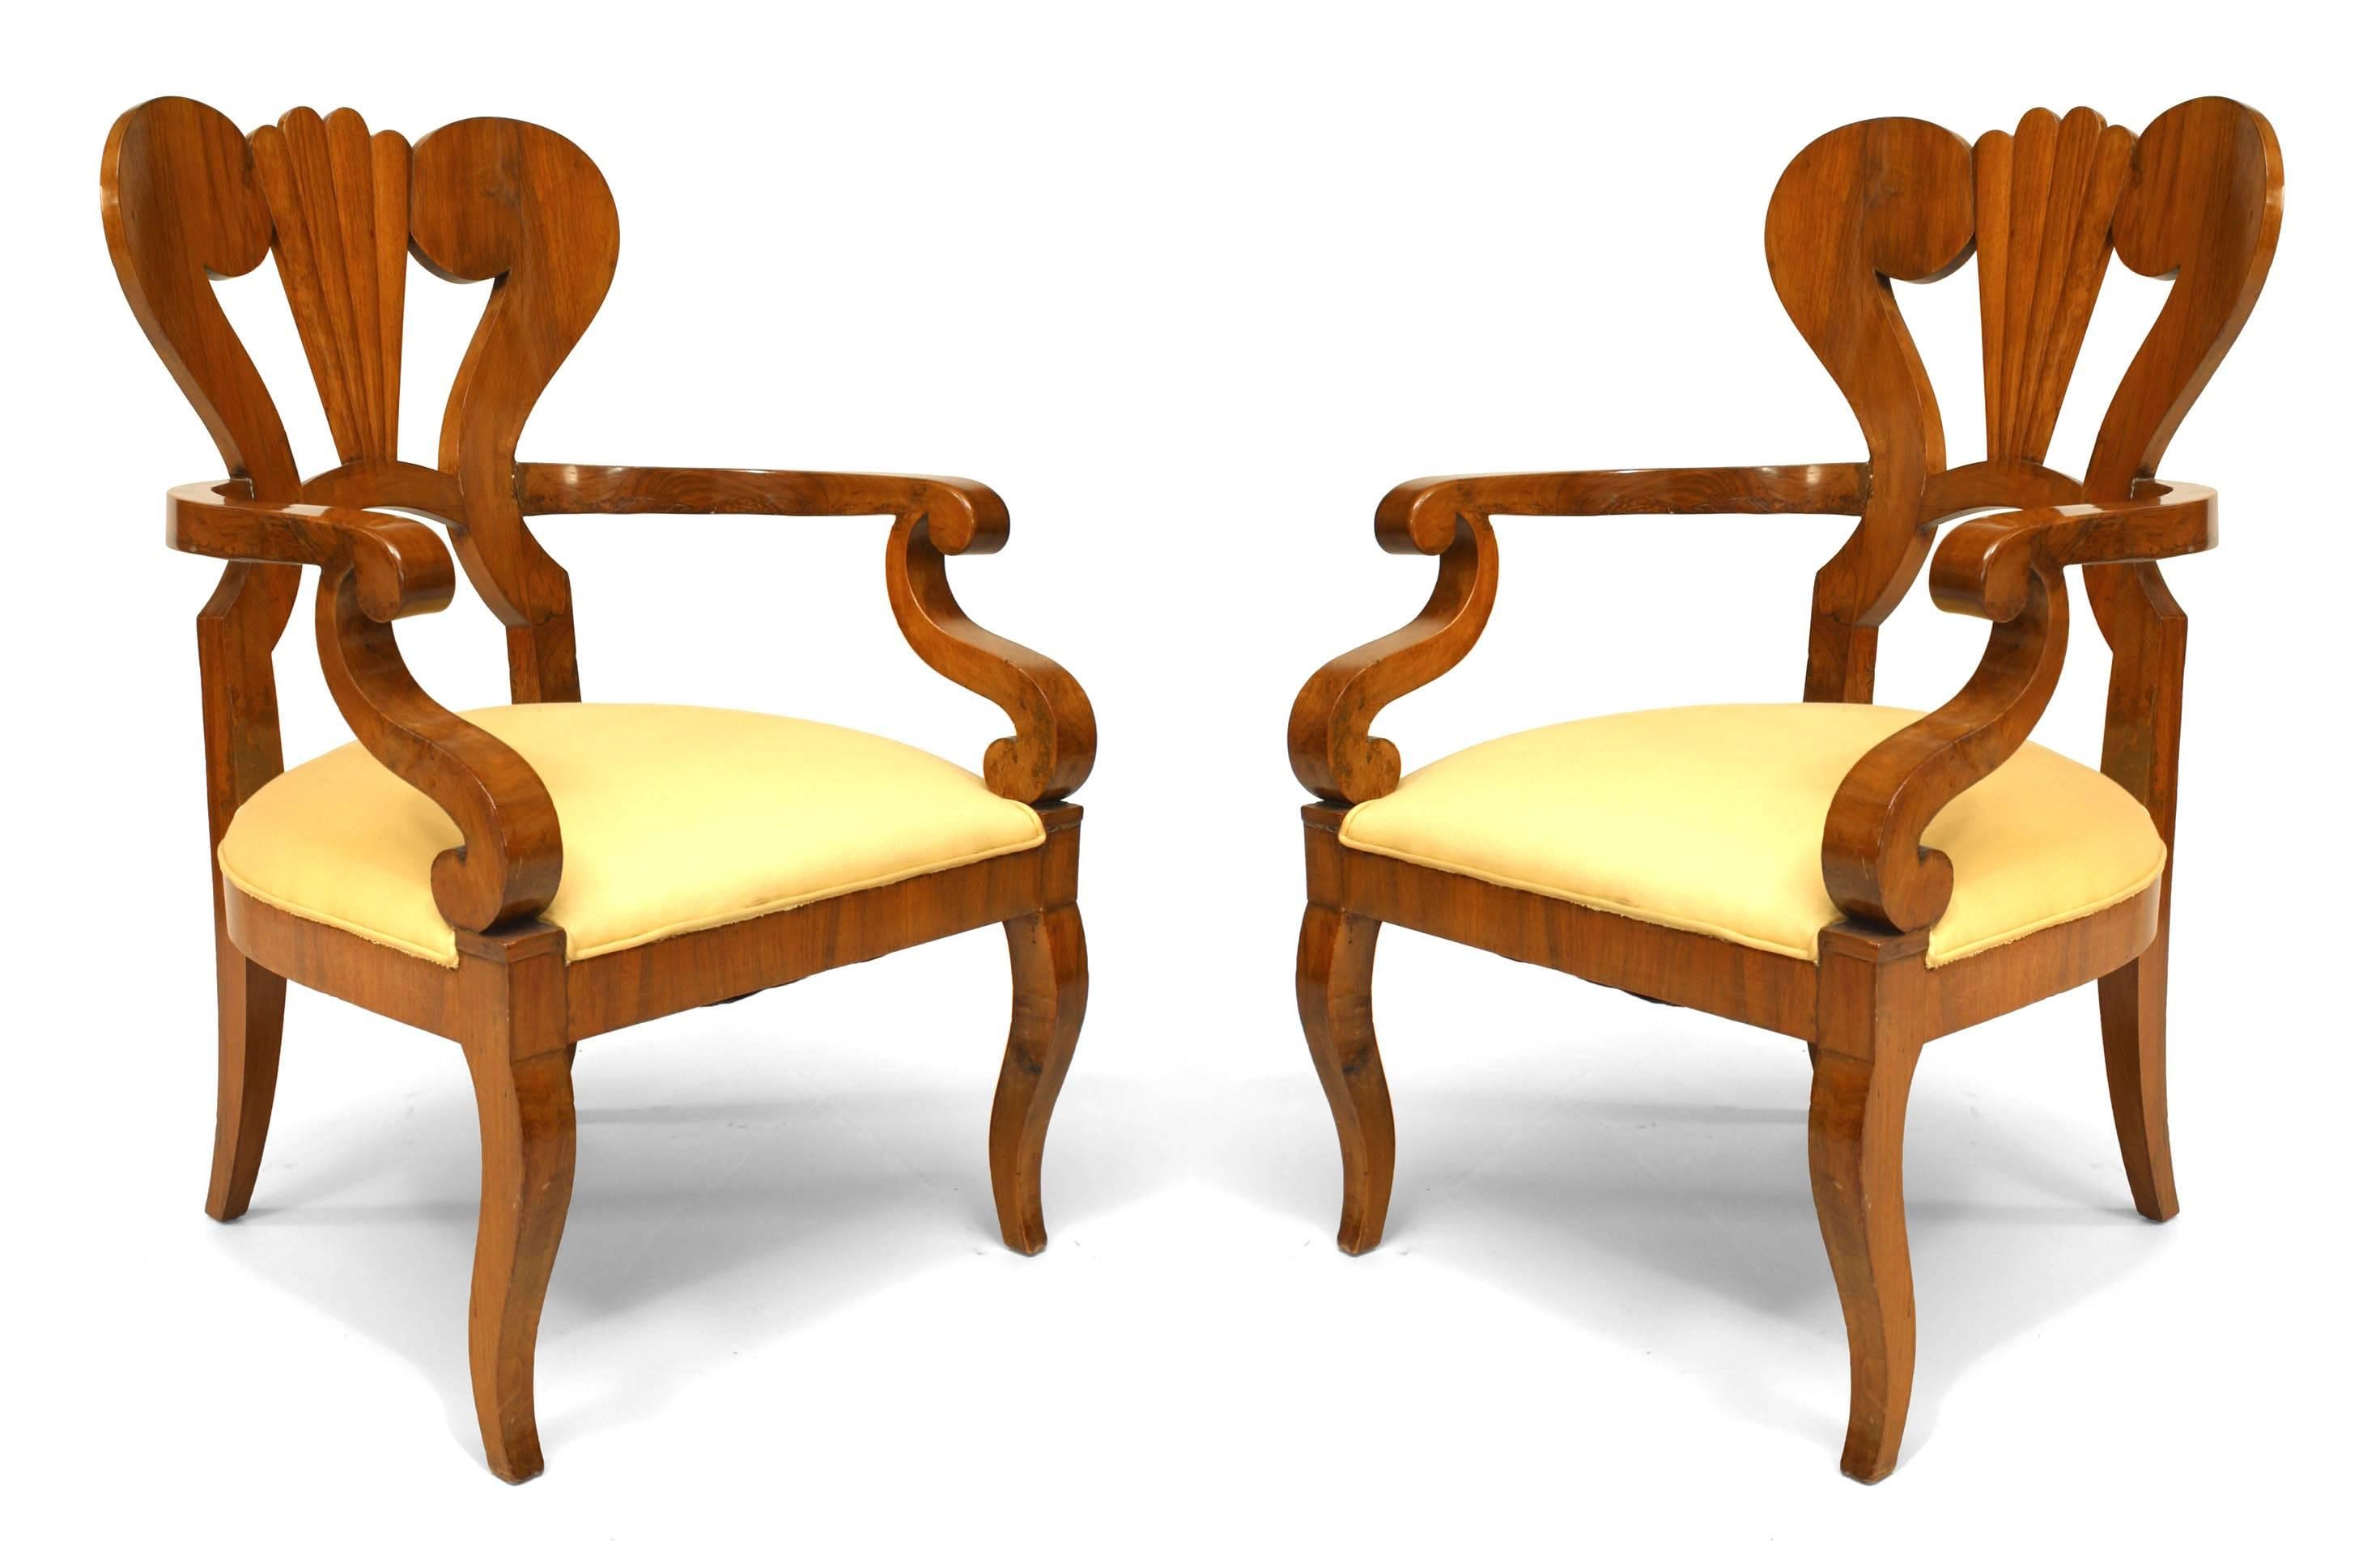 Pair of Austrian Biedermeier cherrywood open Armchairs with fluted fan back design (Circa 1830)
